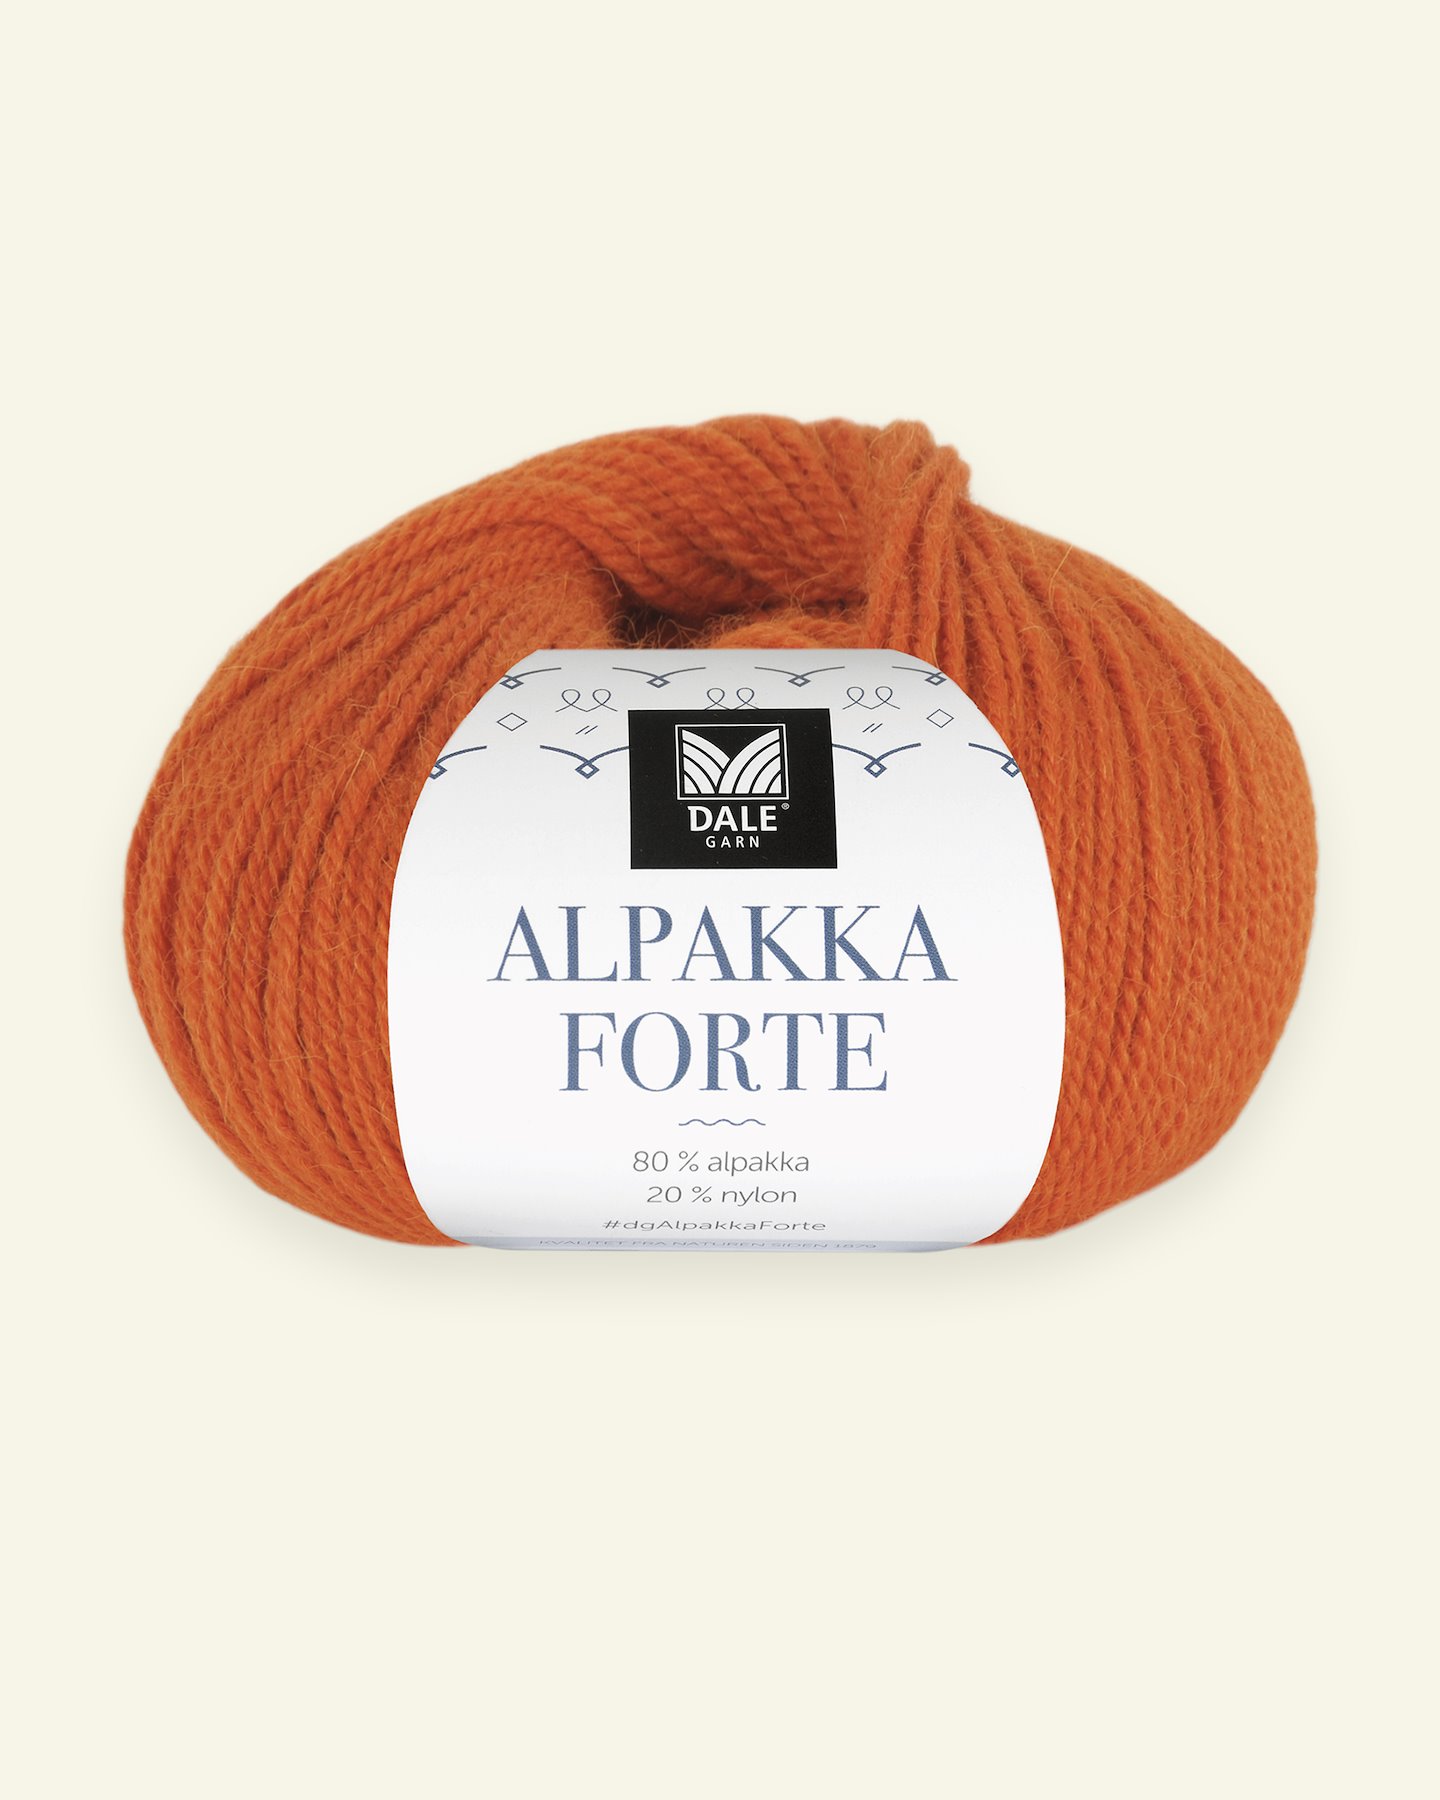 Dale Garn, alpackagarn "Alpakka Forte", orange (740) 90000463_pack